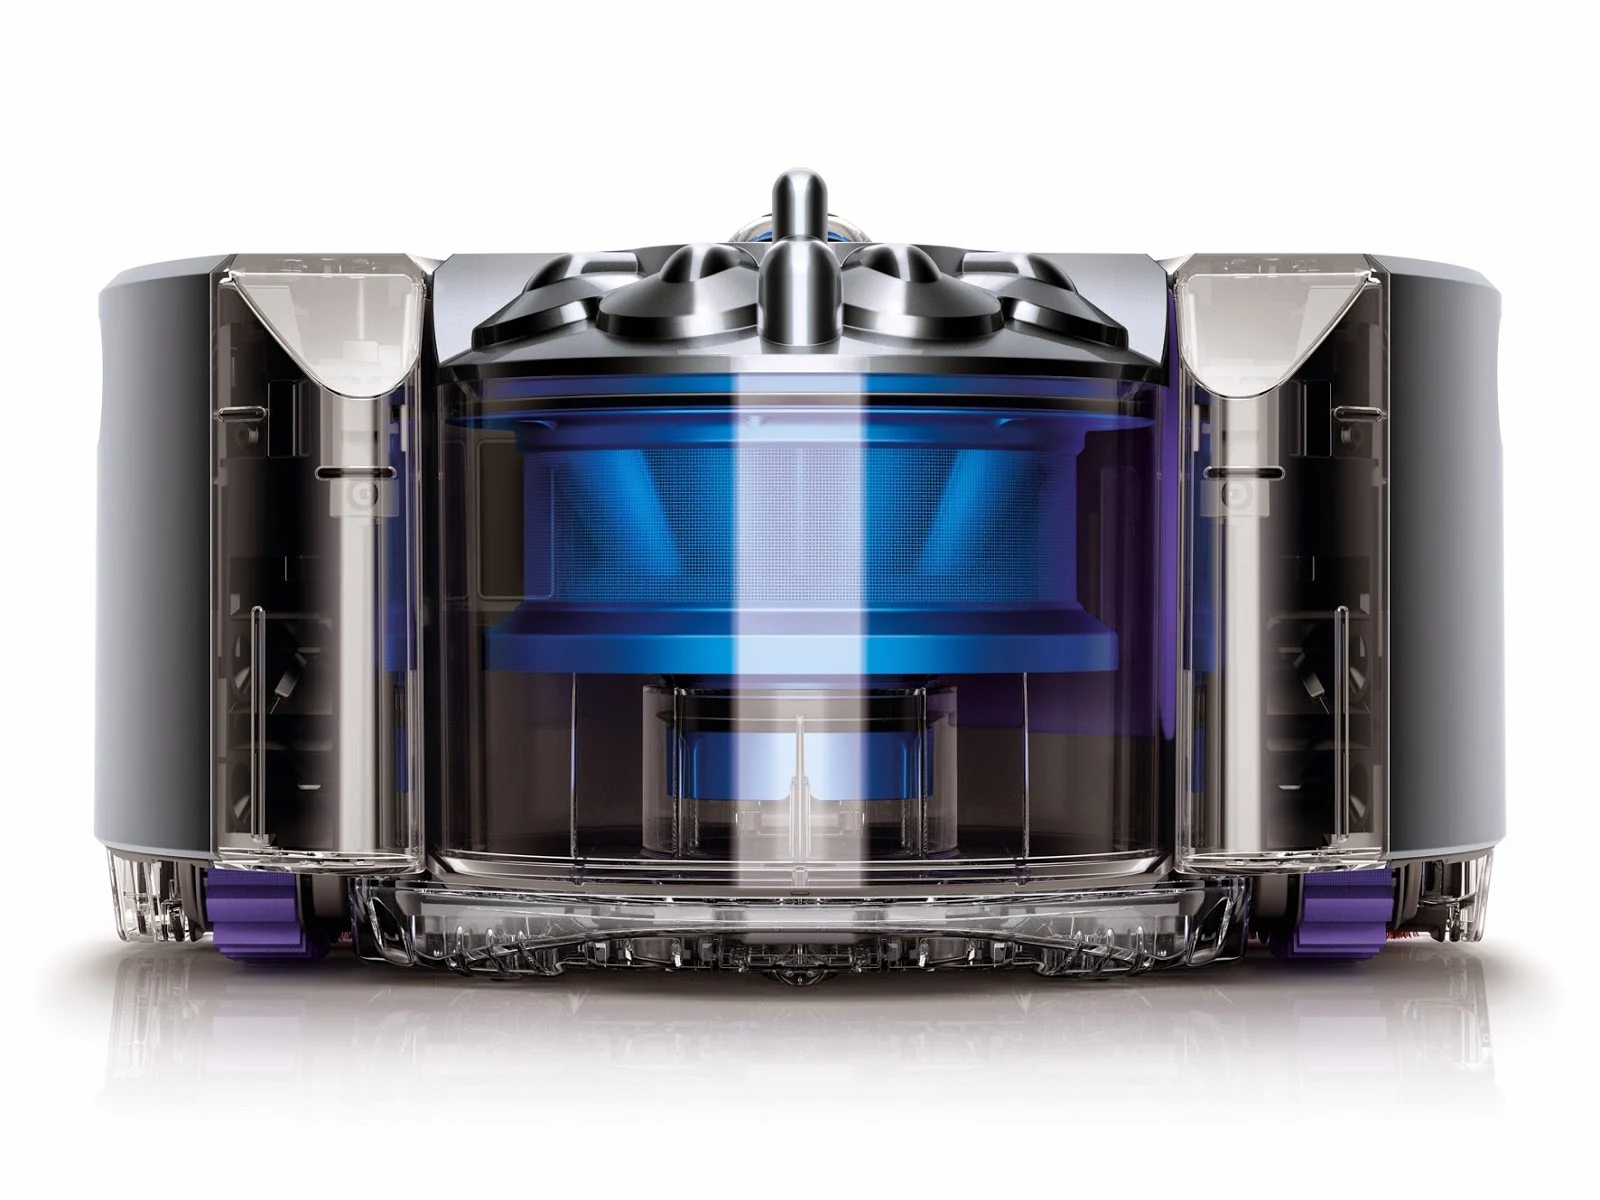 Atomlabor Blog on Tour - IFA 2014 |  Dyson 360eye Robot Vacuum Cleaner